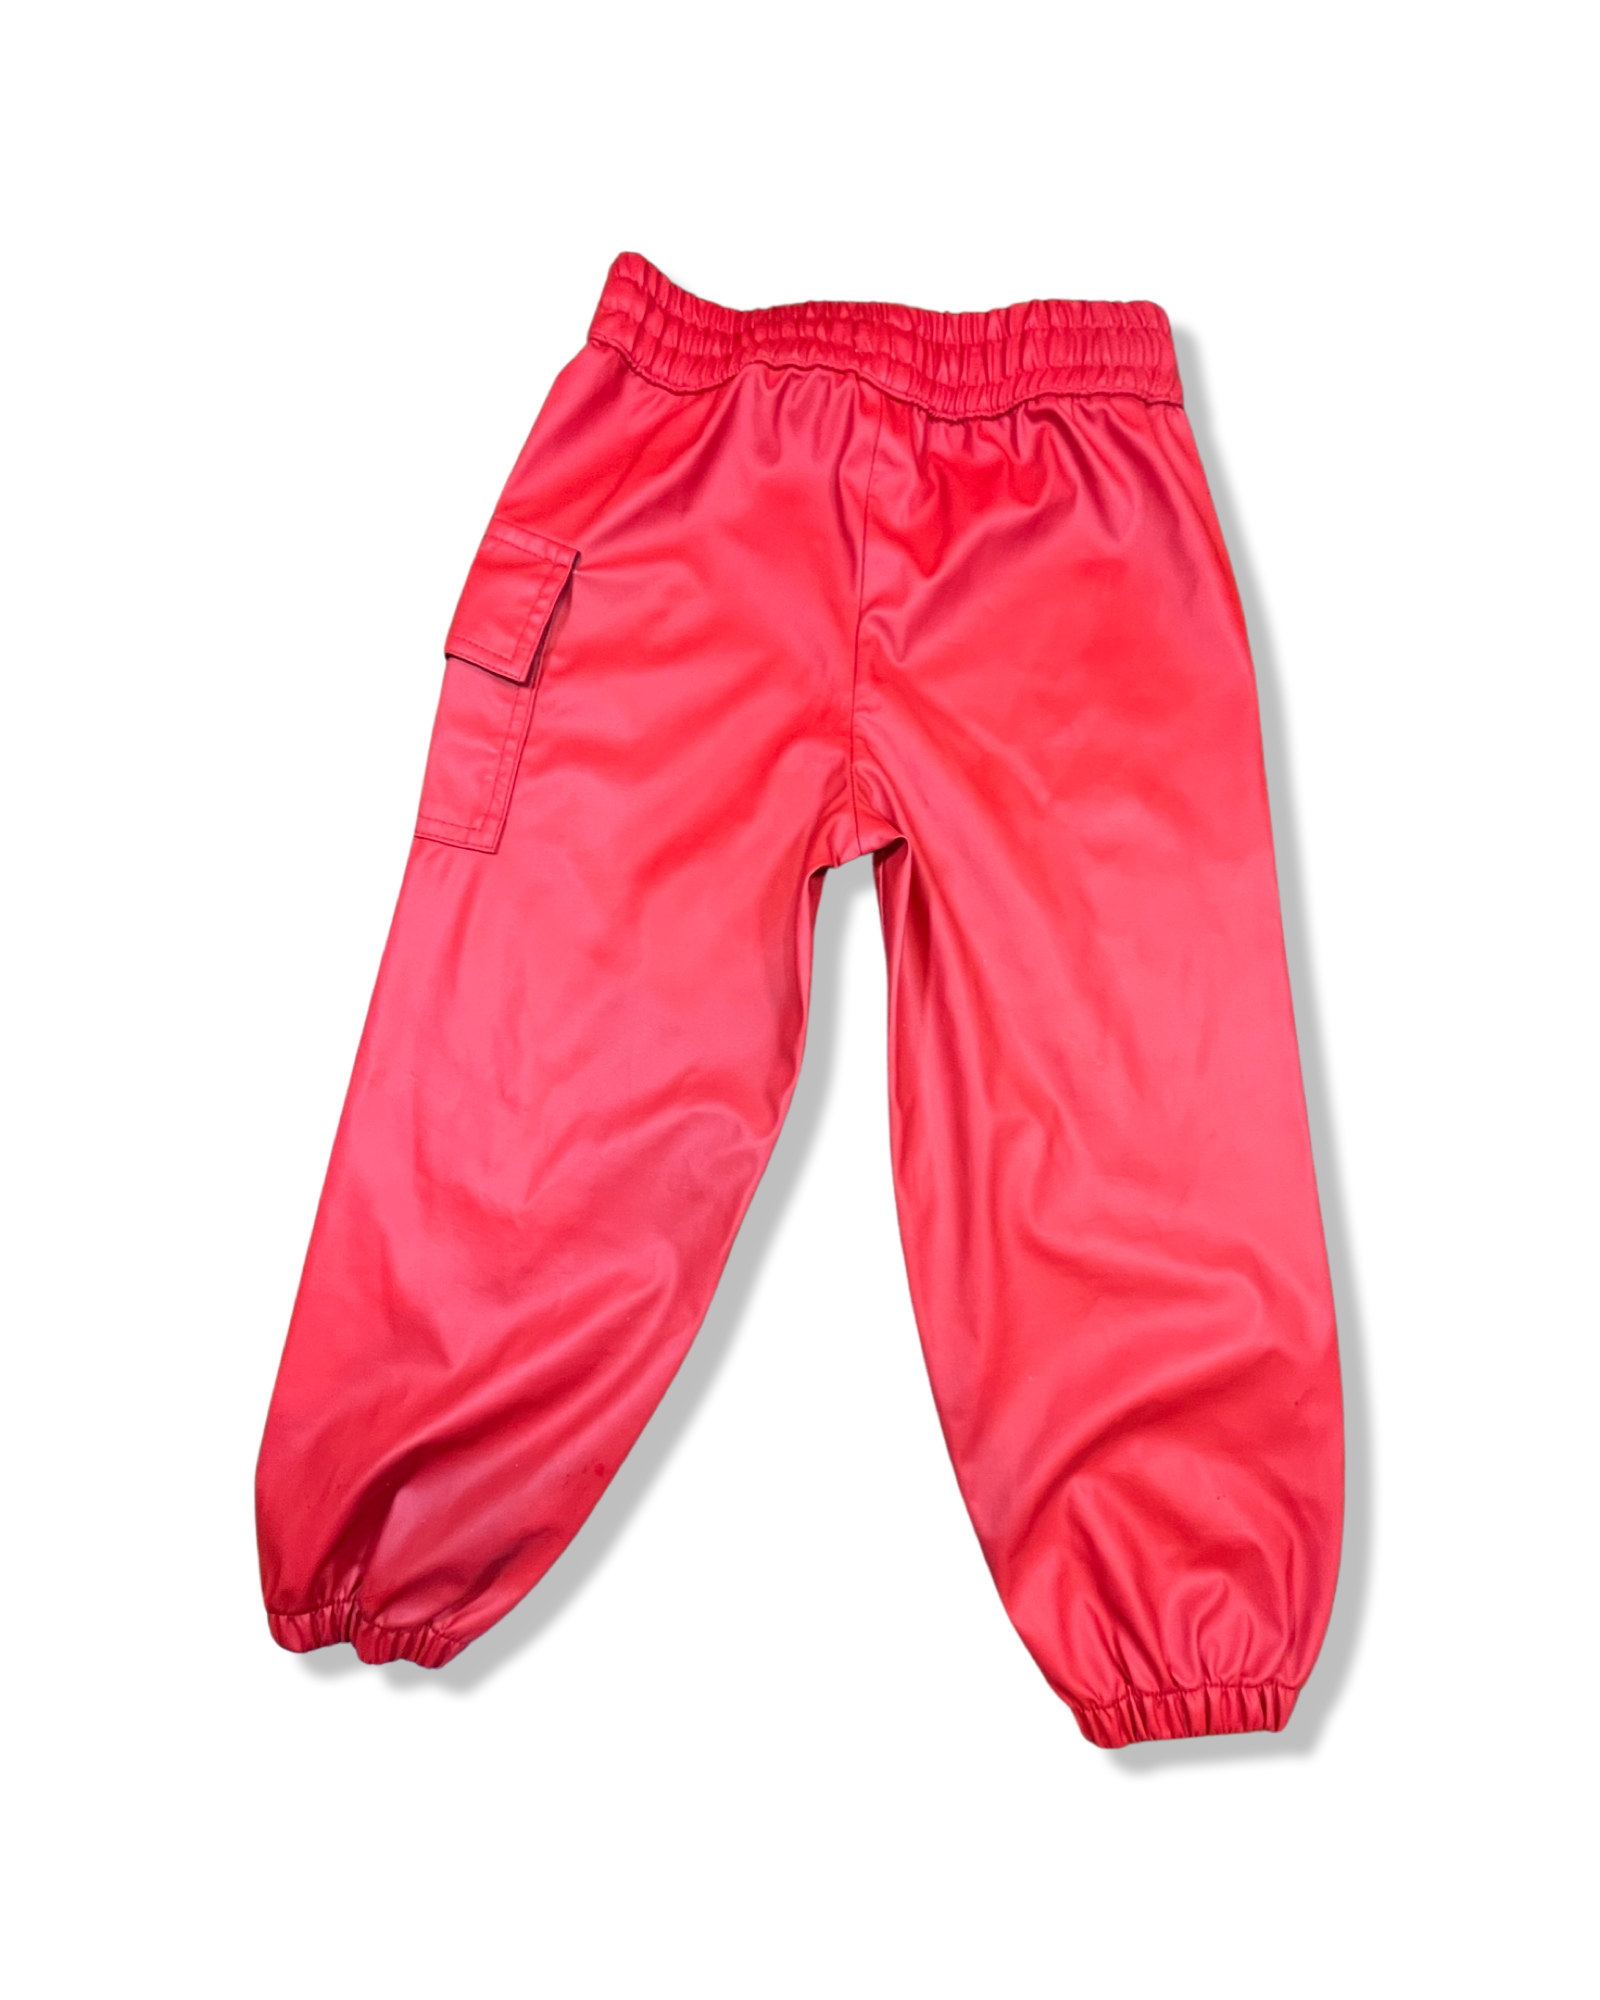 Hatley Red Rain Pants (2T)